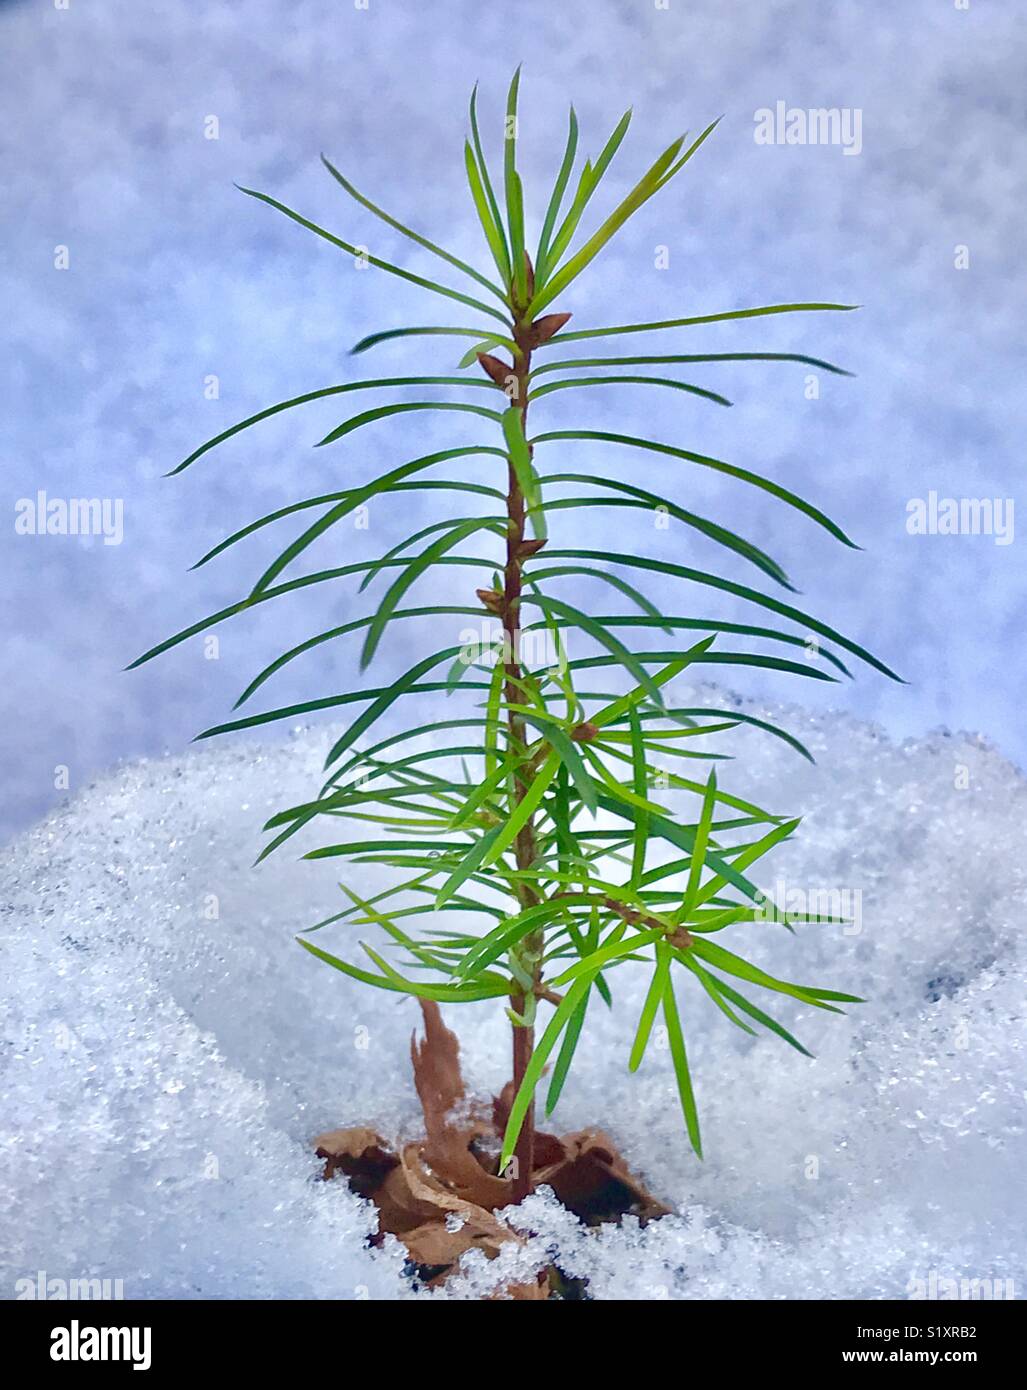 Douglas Fir tree seedling growing up through snow, Seattle Stock Photo